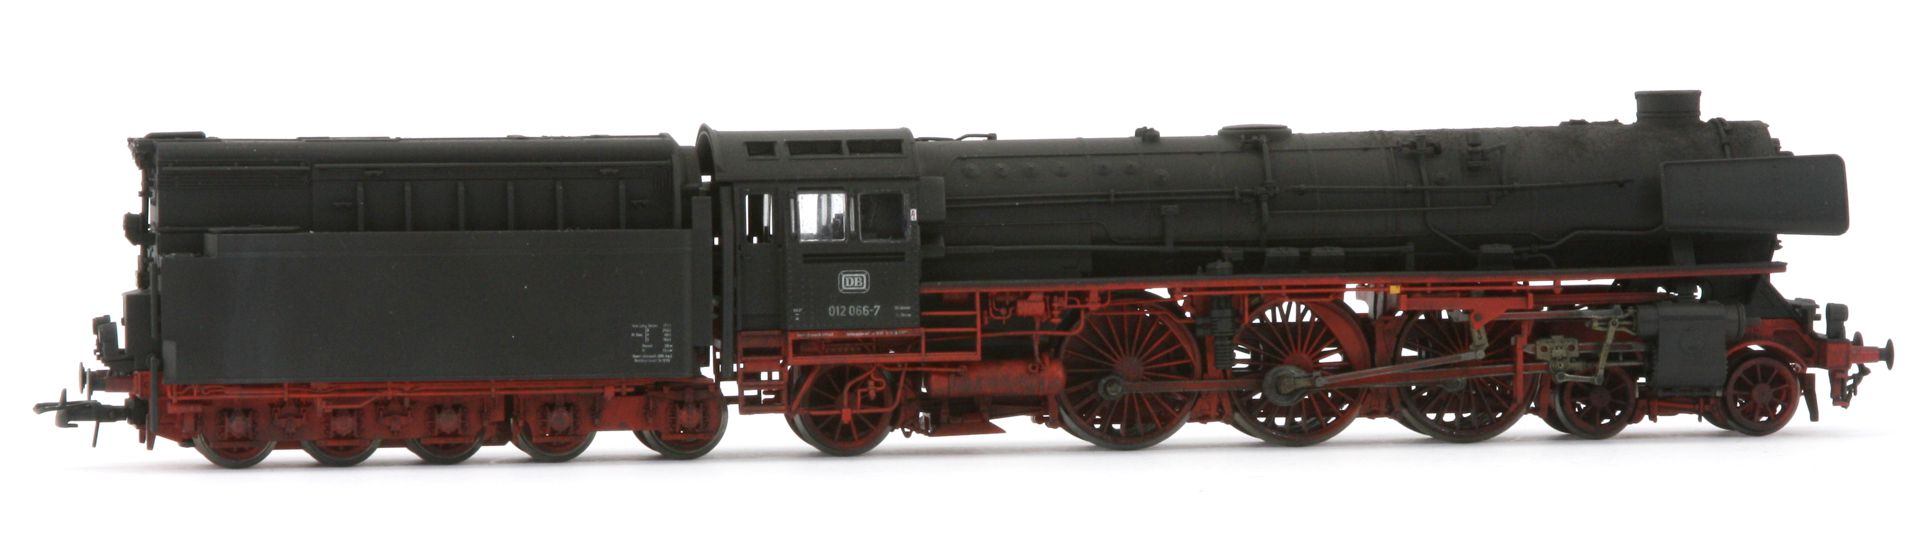 Saxonia 87043 - Dampflok 012 006-7, DB, Ep.IV, gealtert